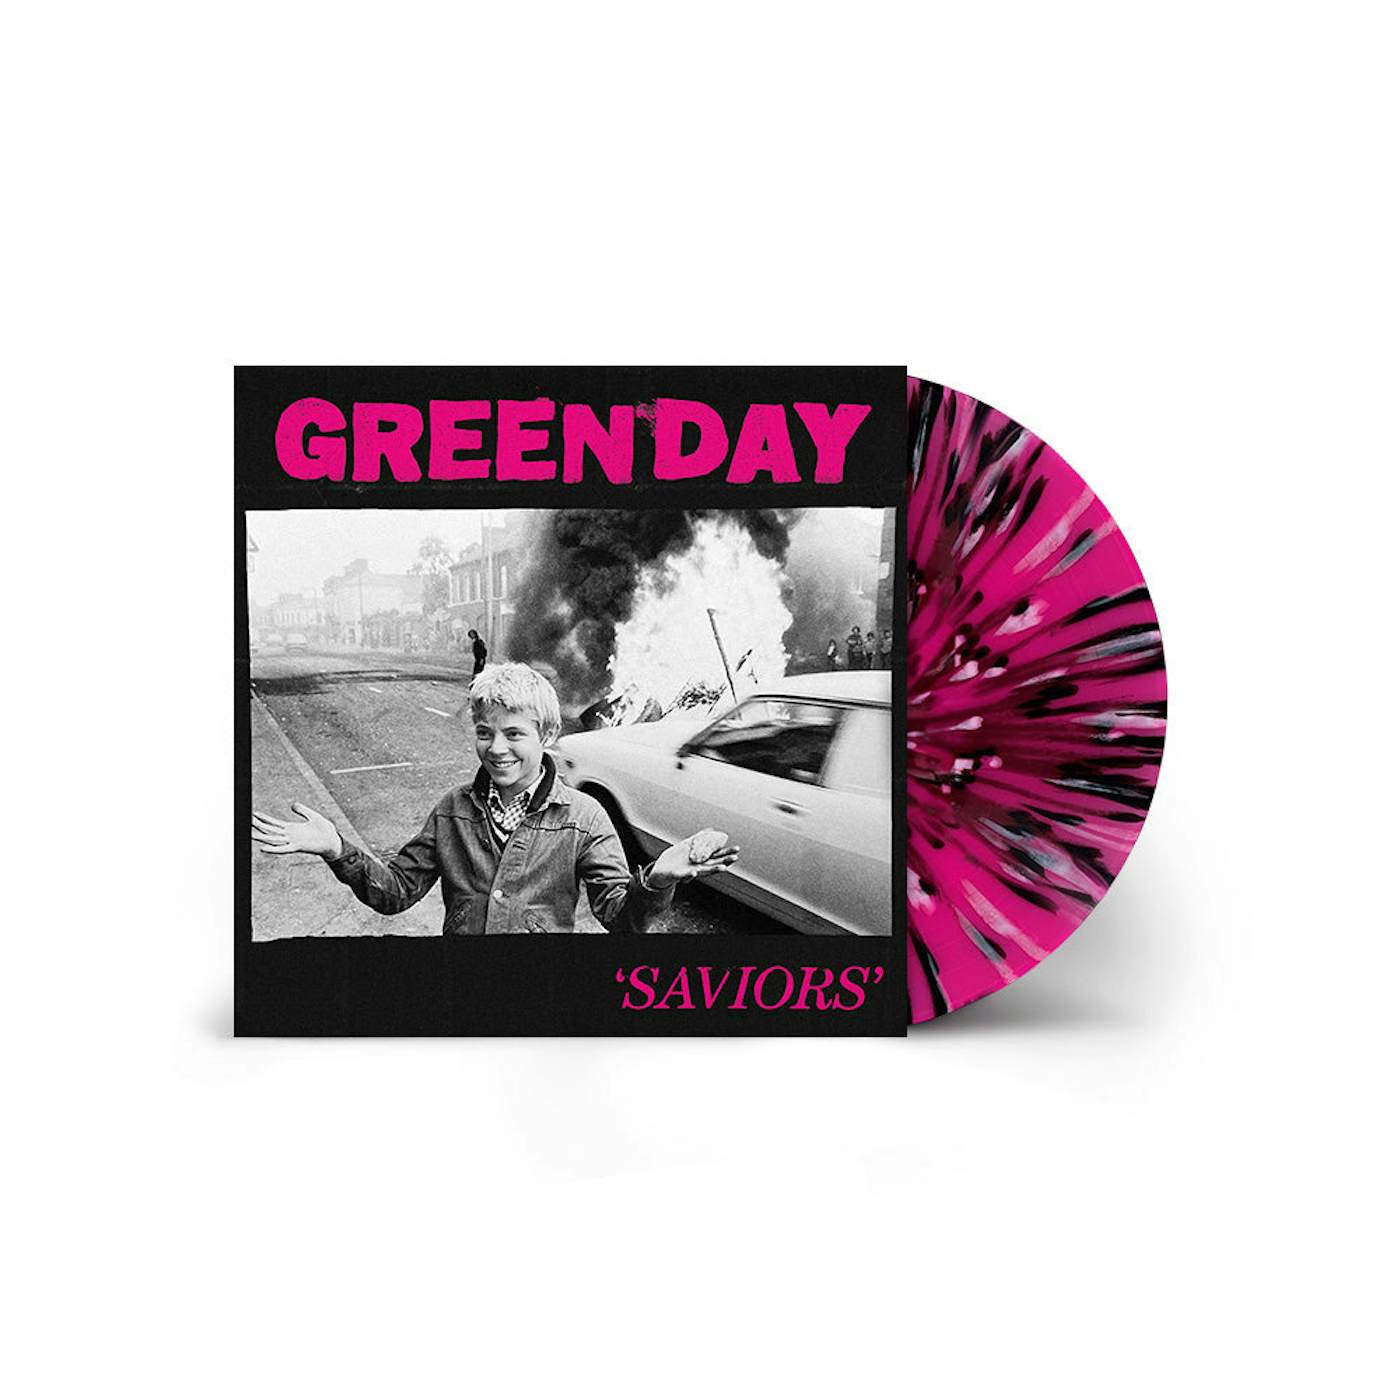 Green Day SAVIORS Spotify Fans First Neon Pink w Black and White Splatter Vinyl LP